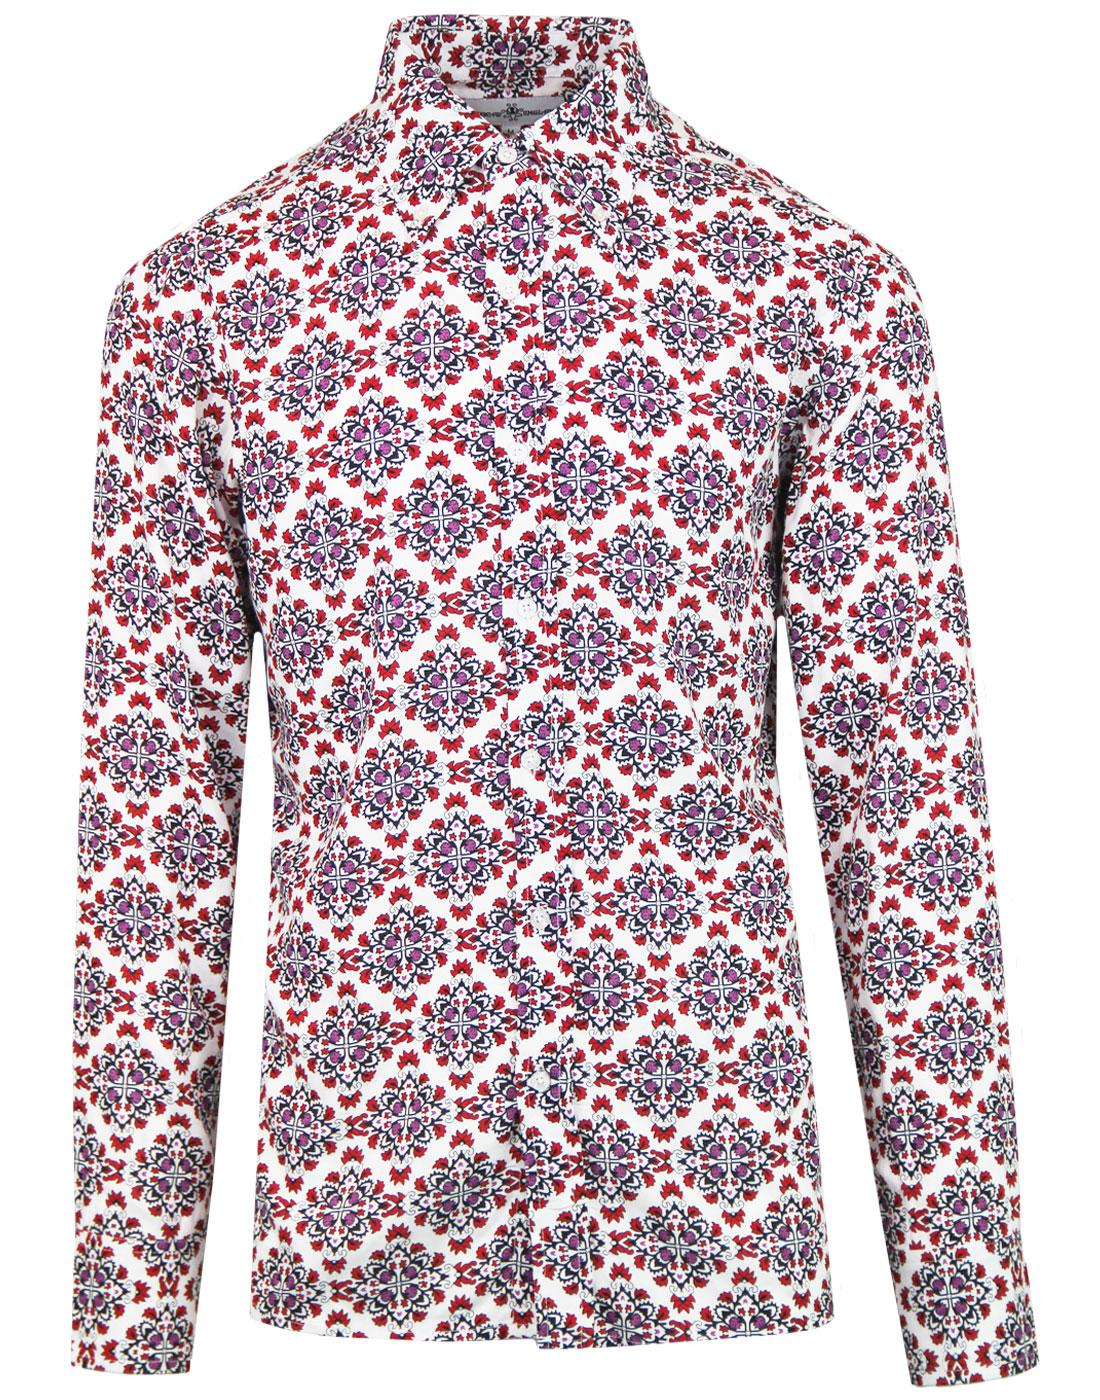 Wallflower MADCAP ENGLAND Mod Rayon Floral Shirt